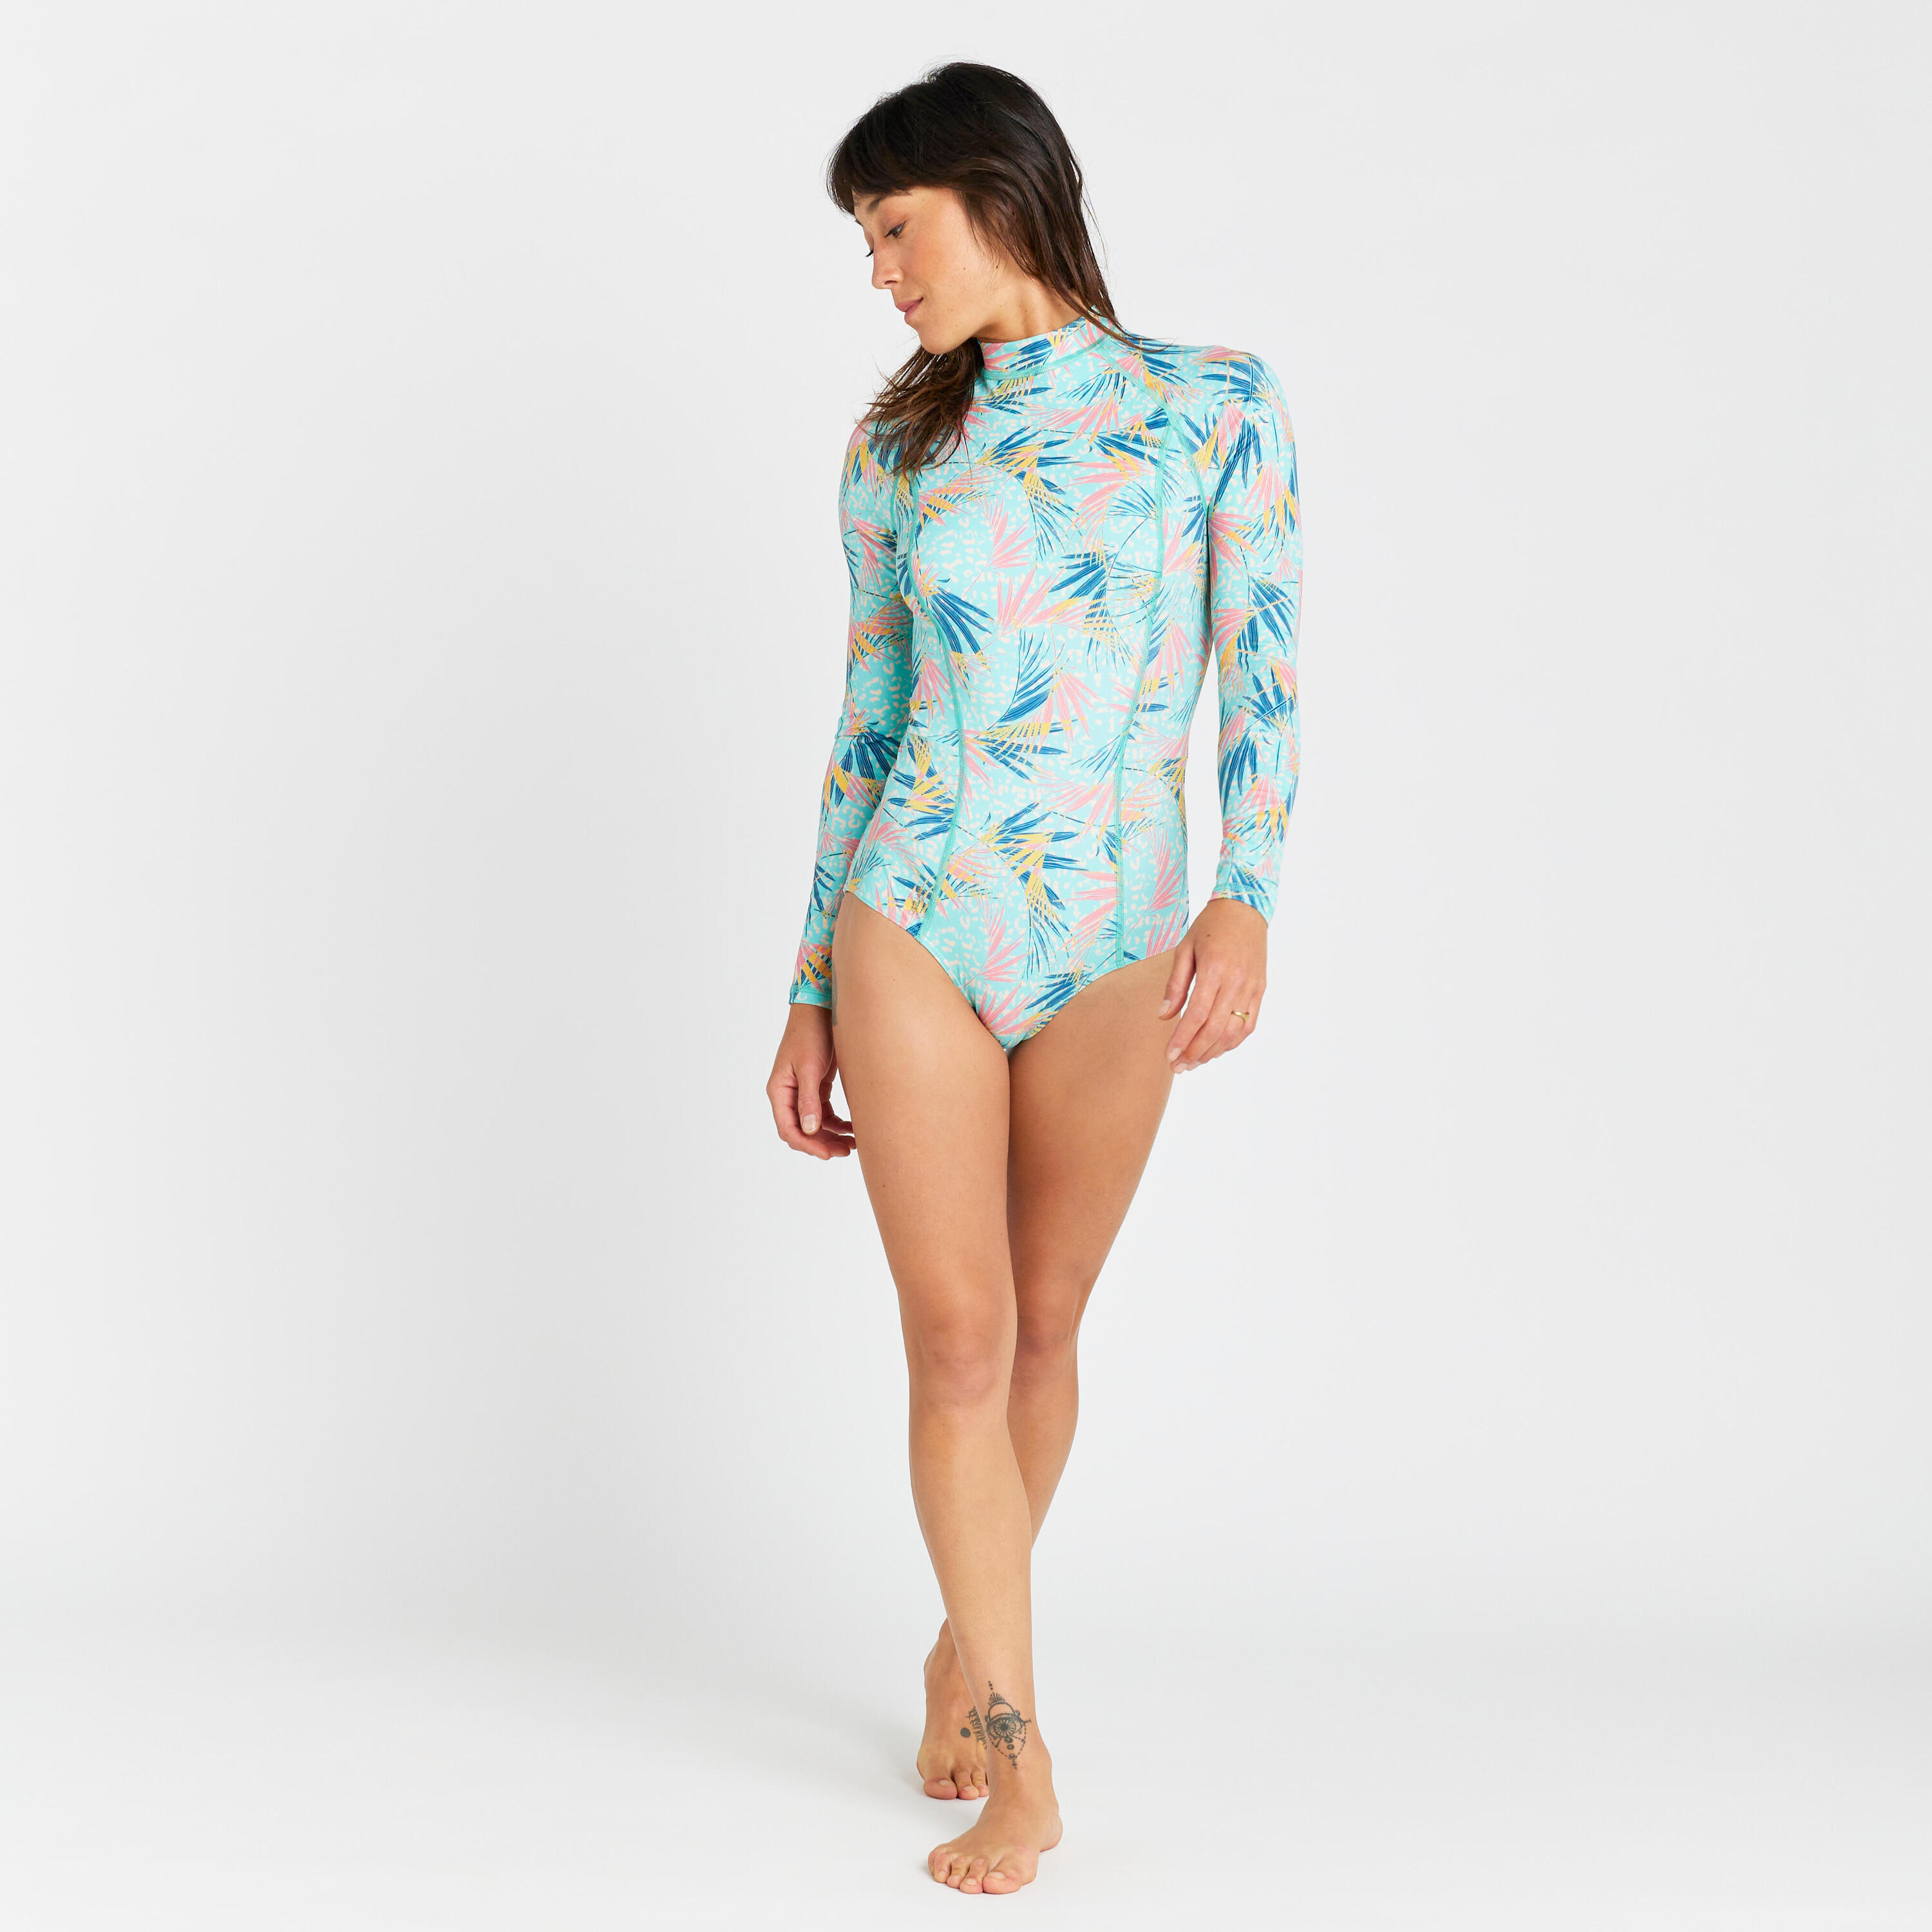 Women's 1-piece long sleeved swimsuit - Dani leoplant turquoise 6/6